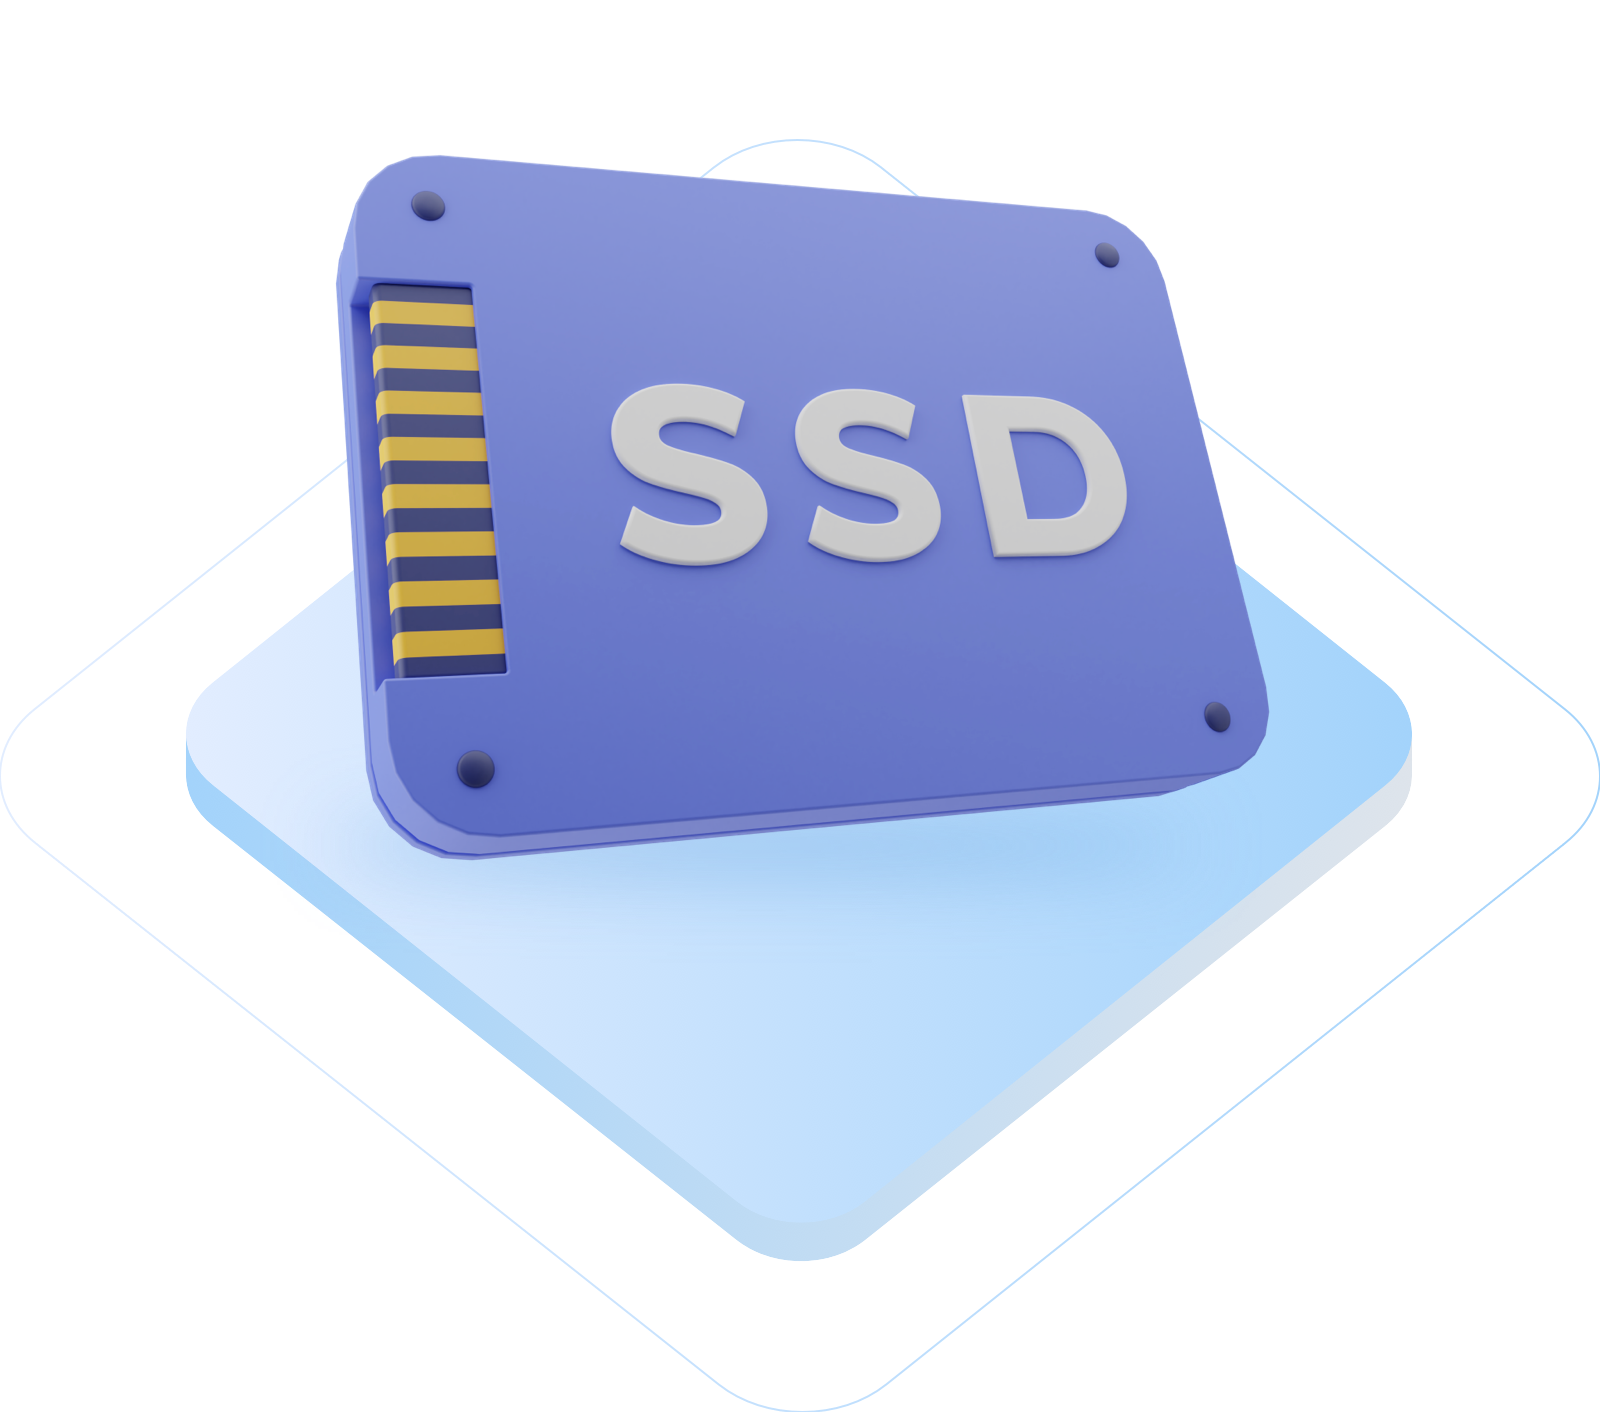 SSD VPS